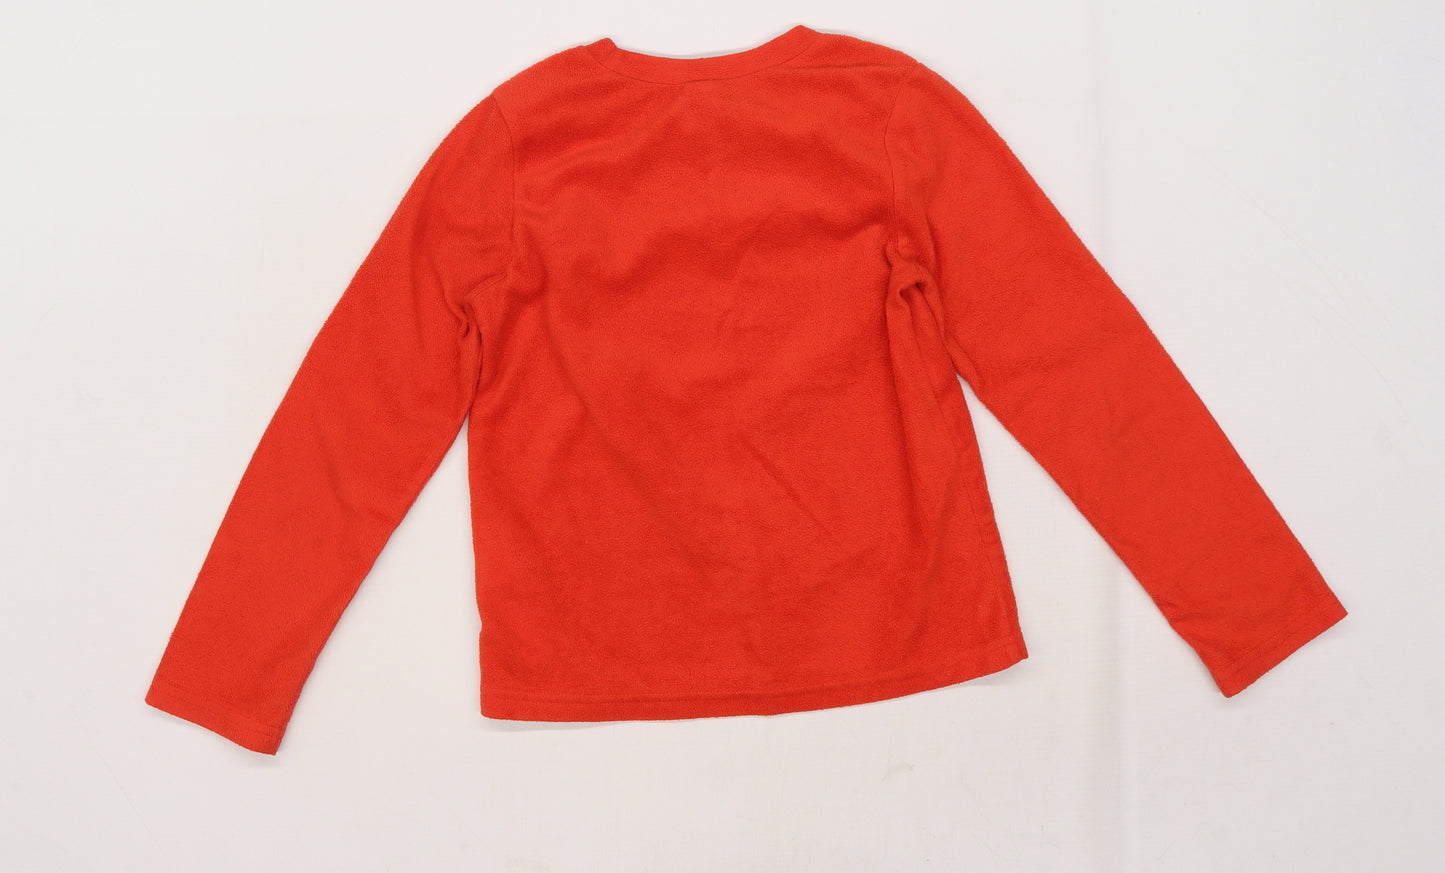 DECATHLON Boys Red  Fleece Pullover Sweatshirt Size 8 Years